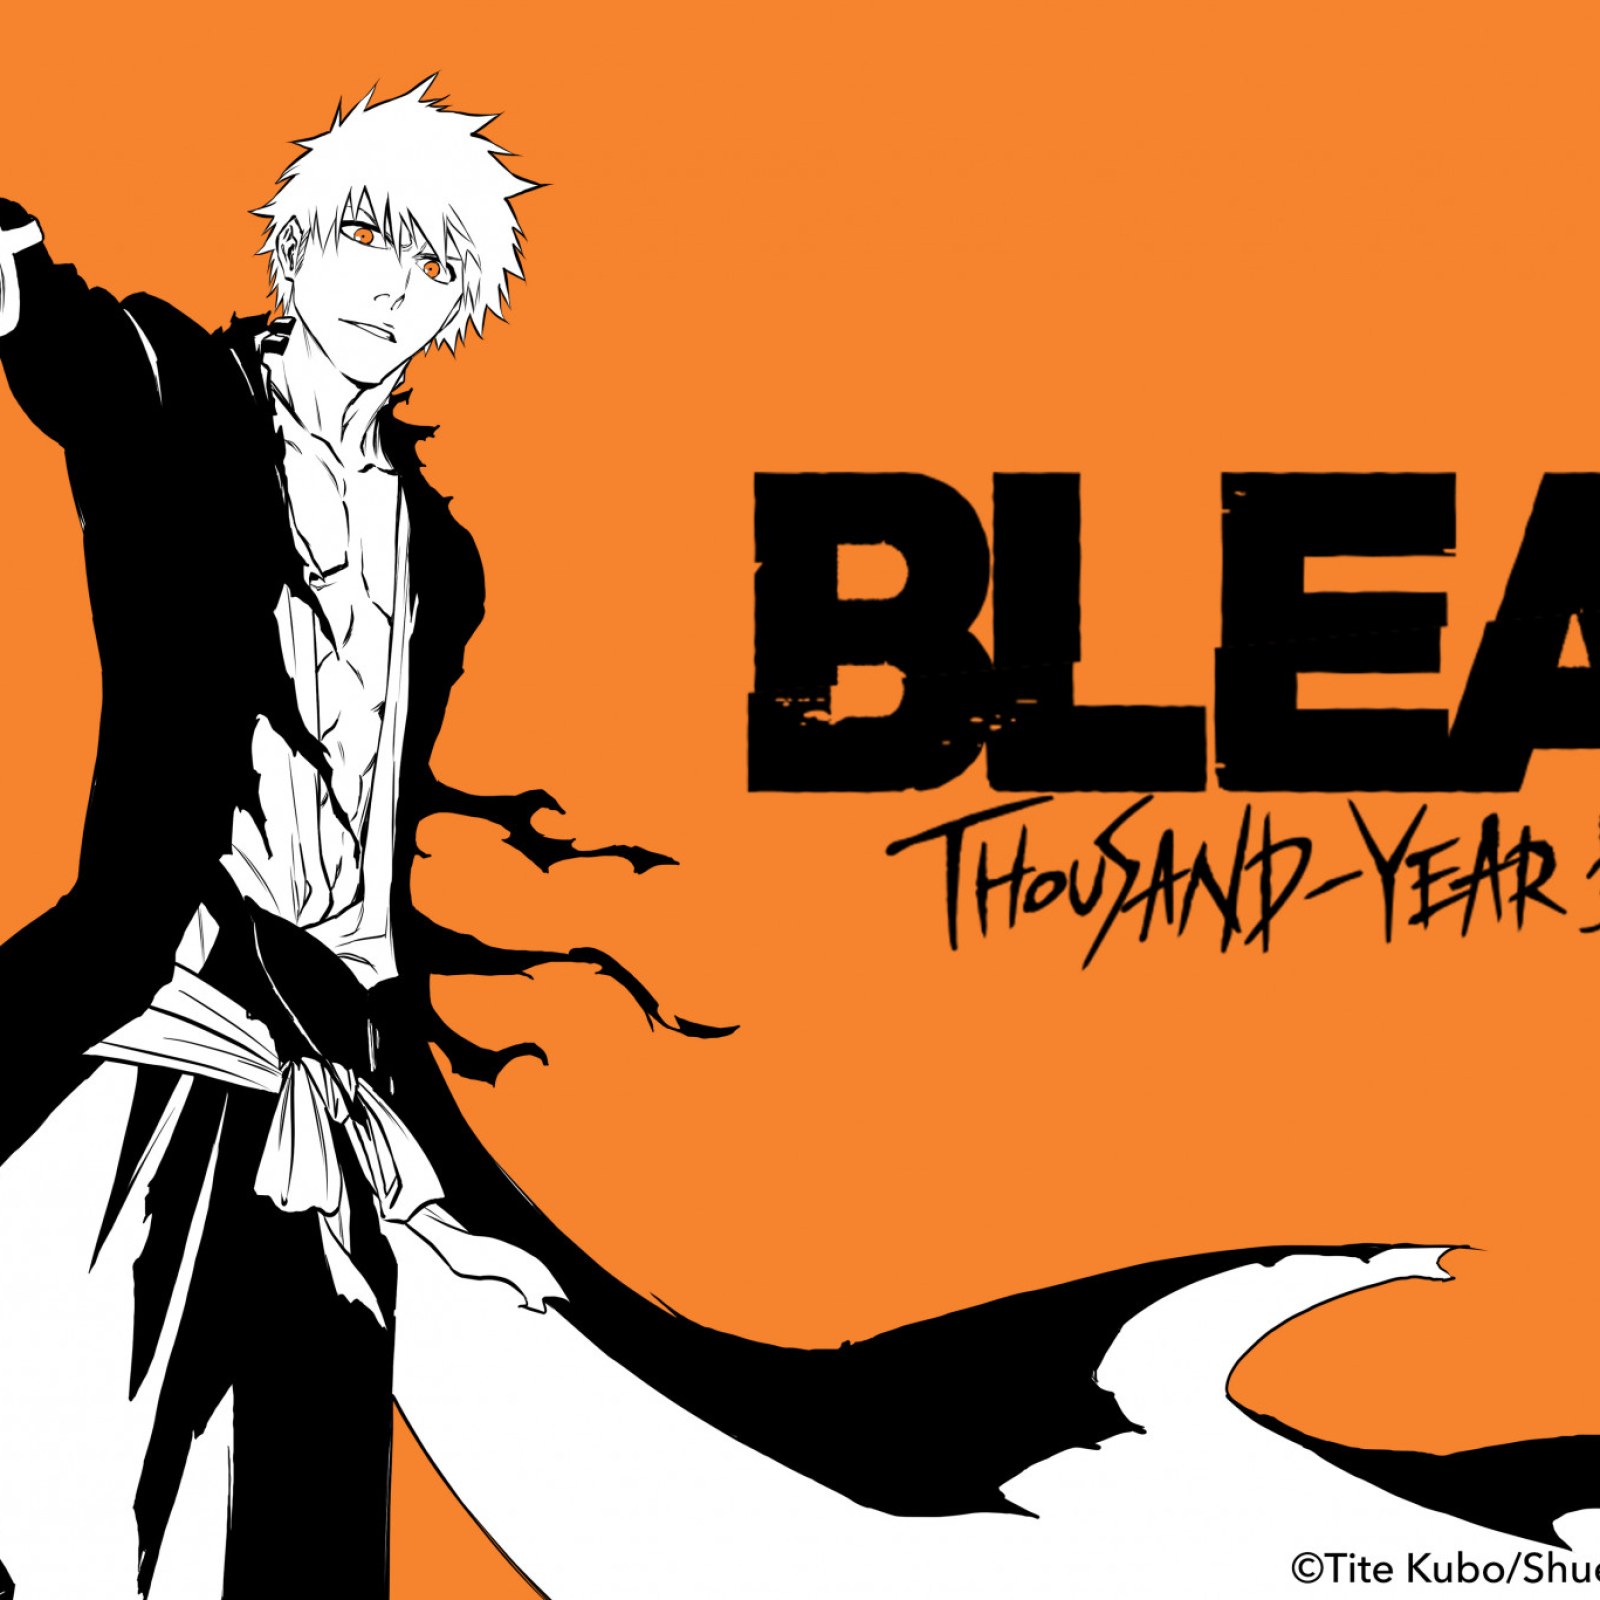 2022 Bleach Ichigo Thousand-Year Blood war+ Crunchyroll anime